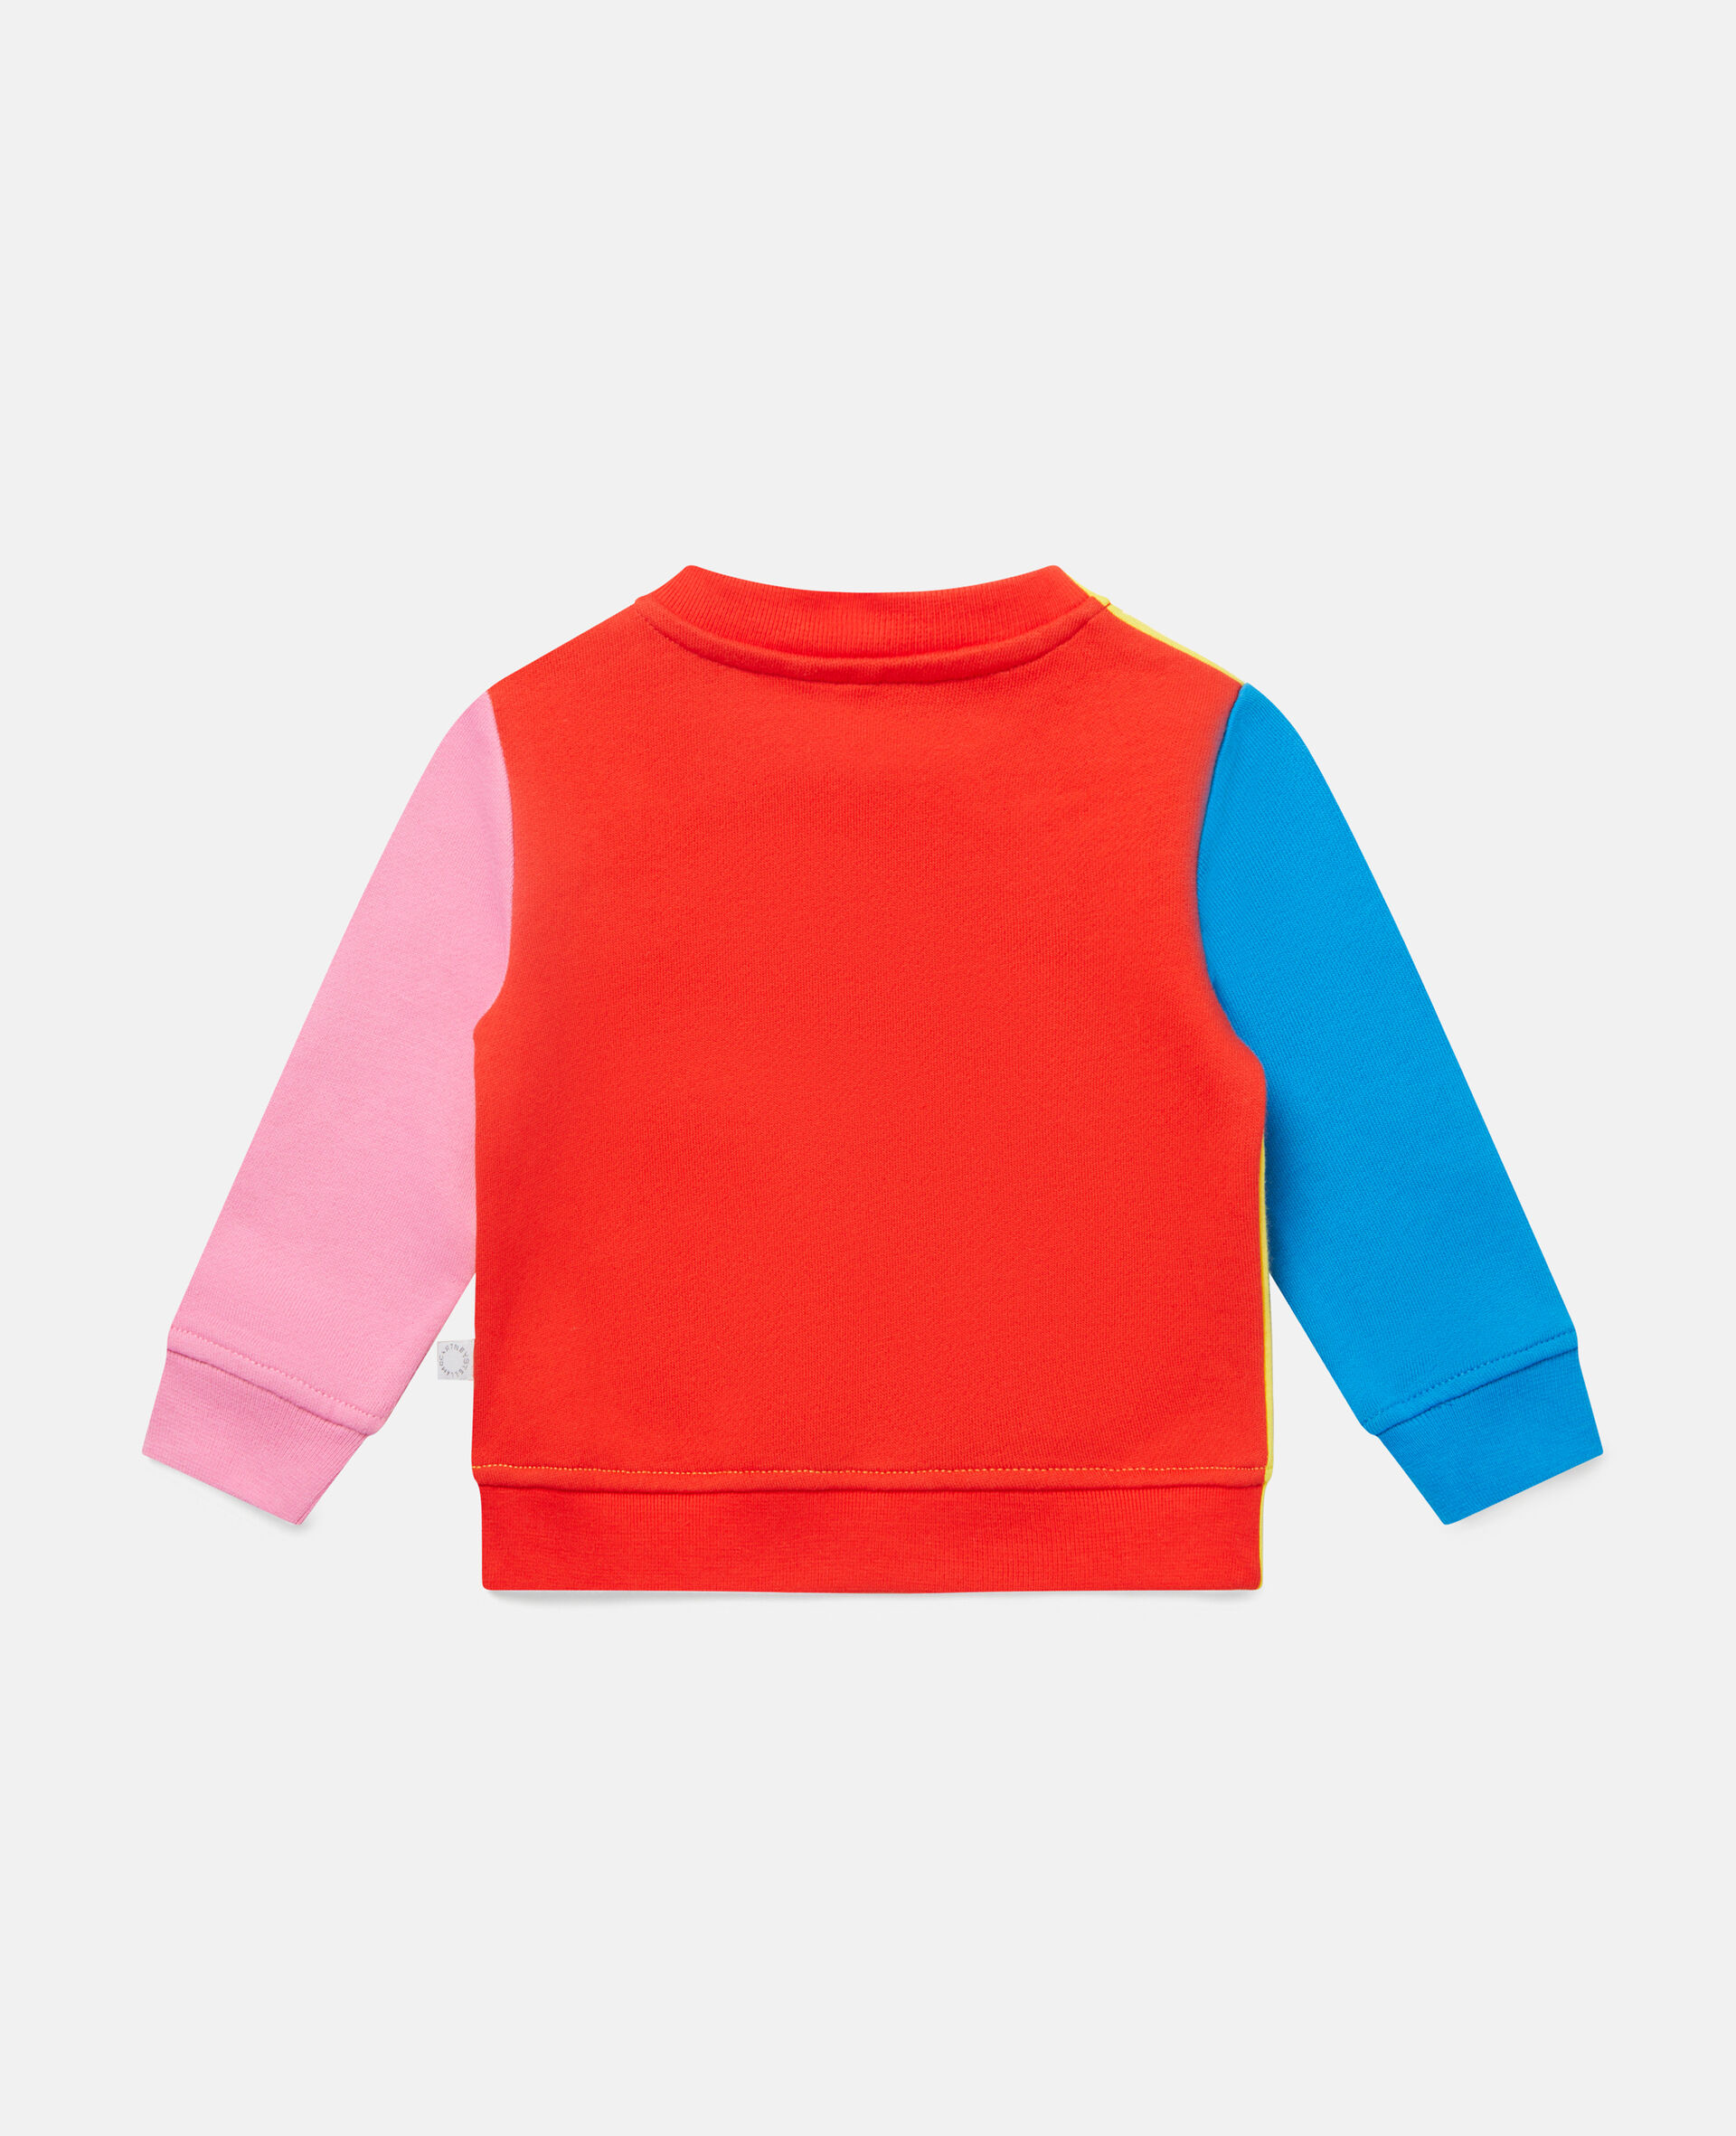 Cotton Fleece Colourblock Sweatshirt-Multicolour-large image number 3